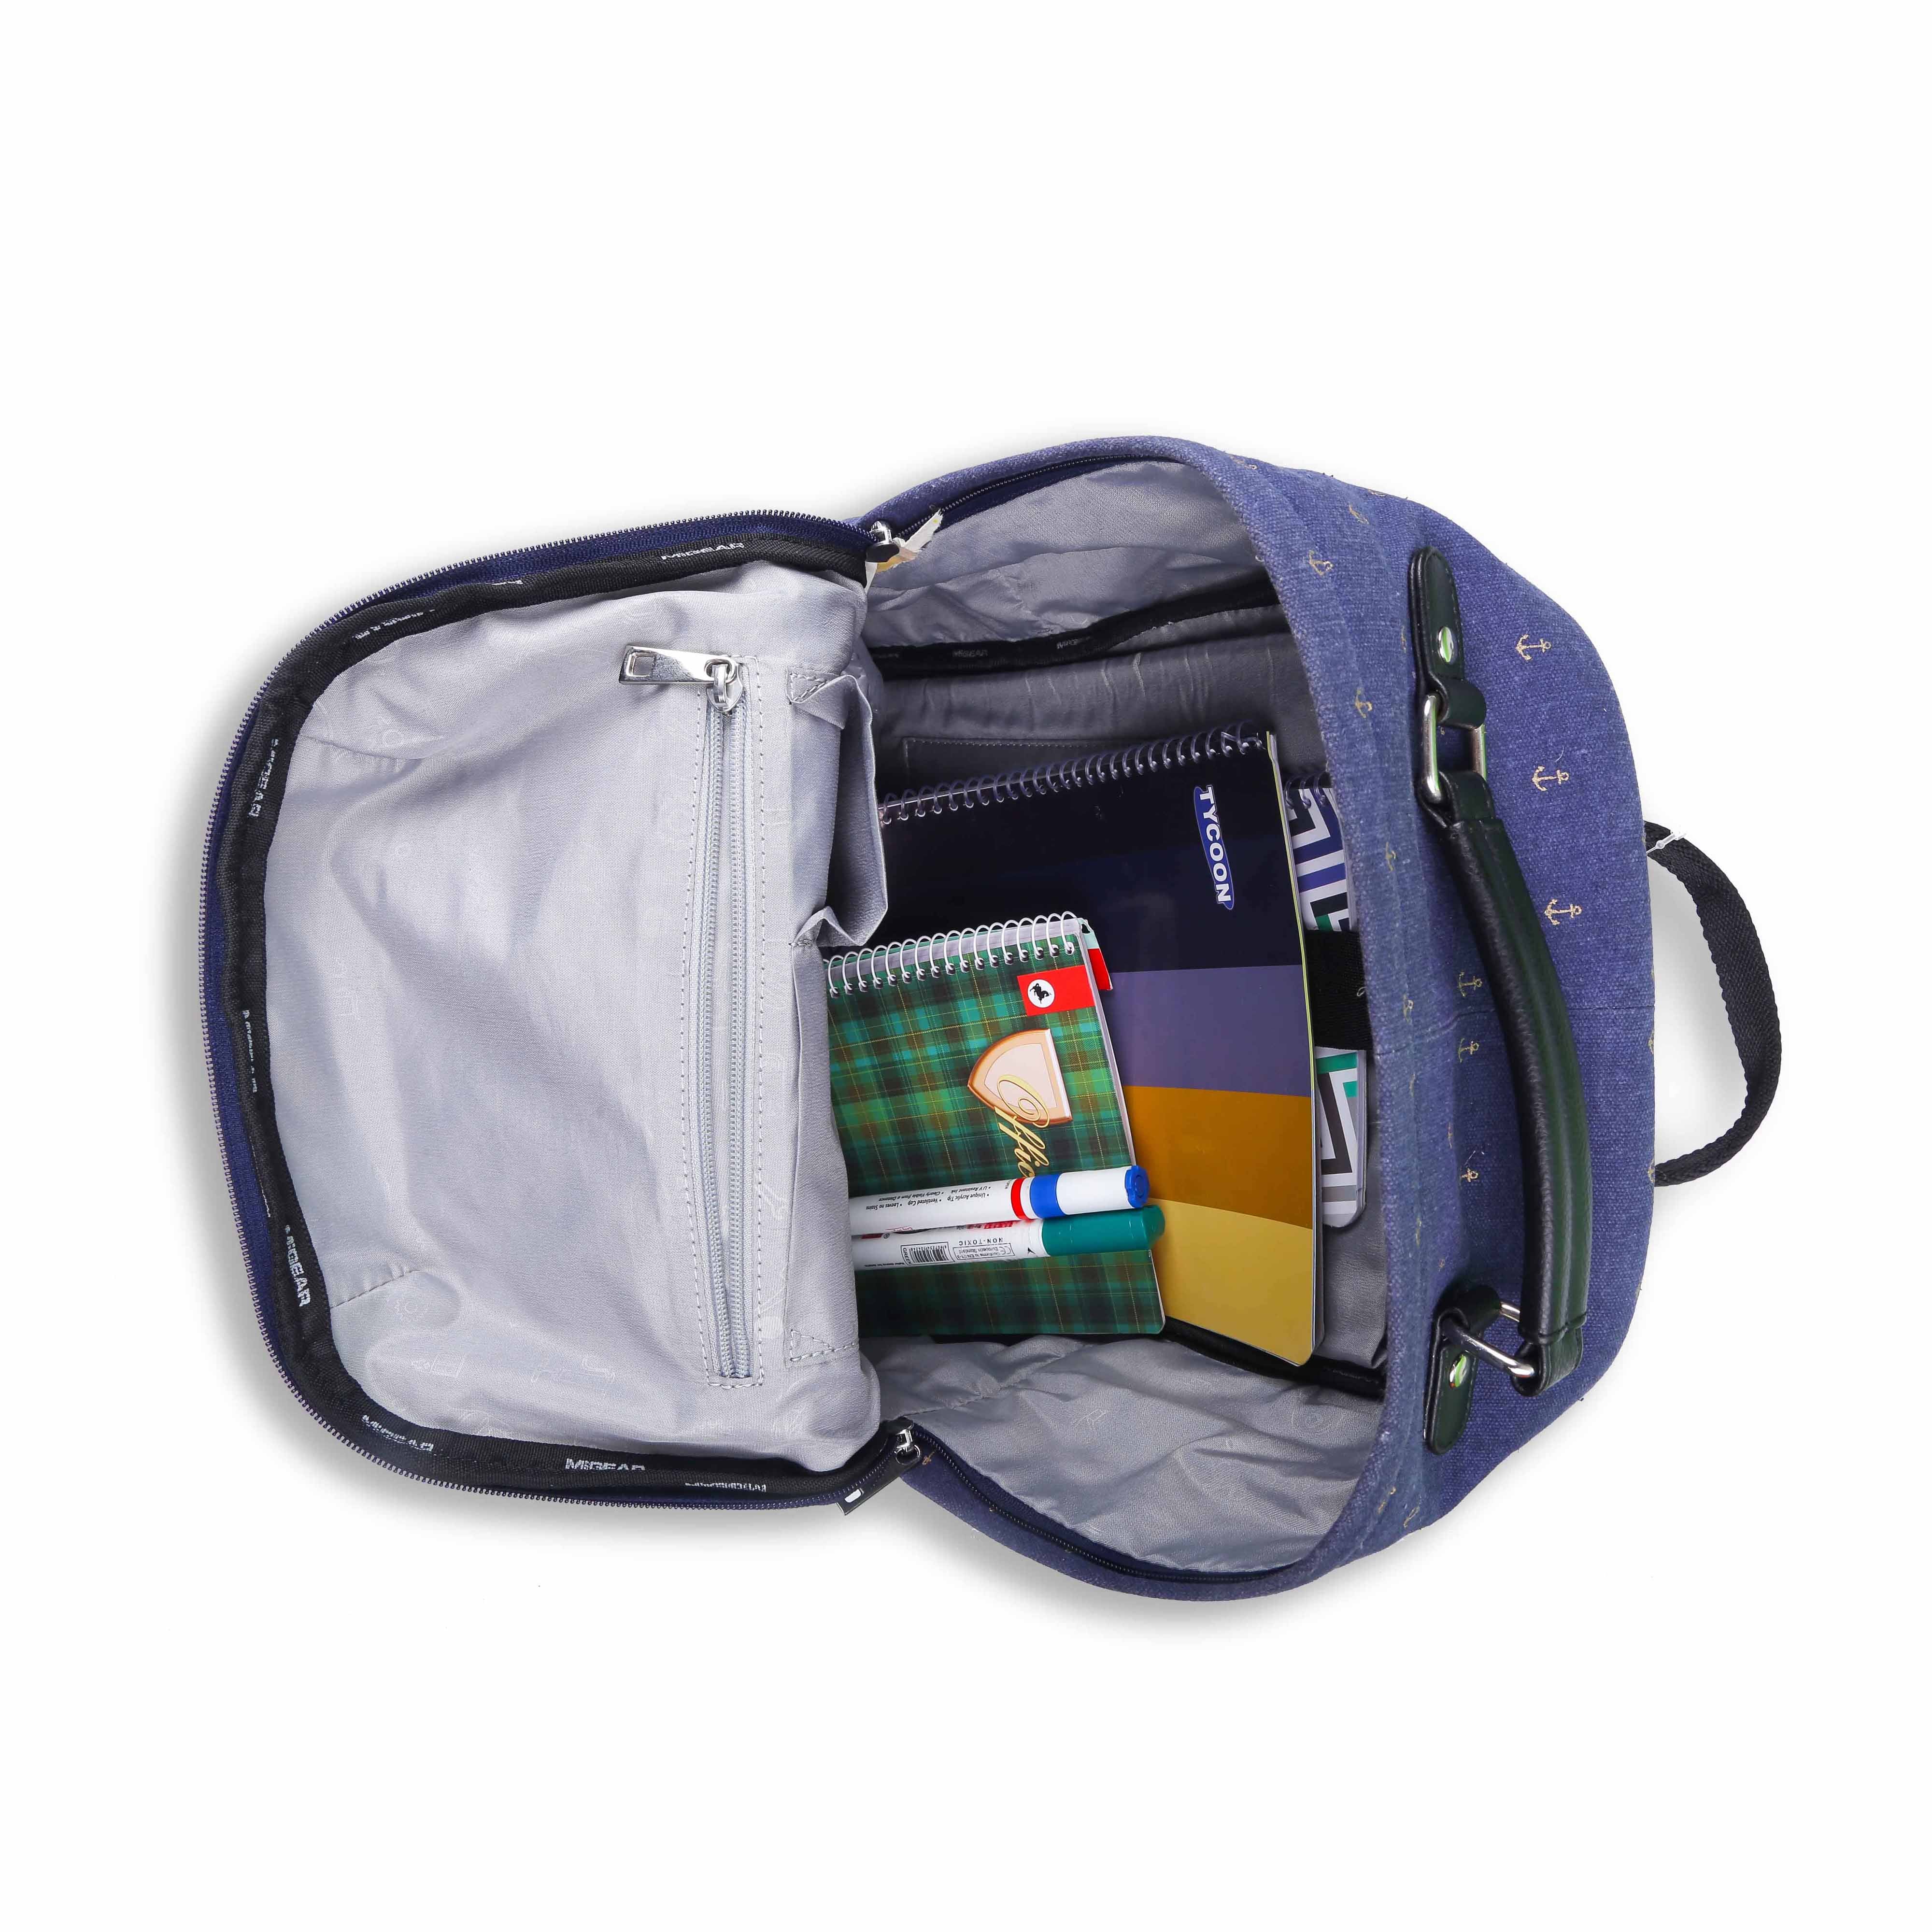 Anchor Mod Canvas Backpack